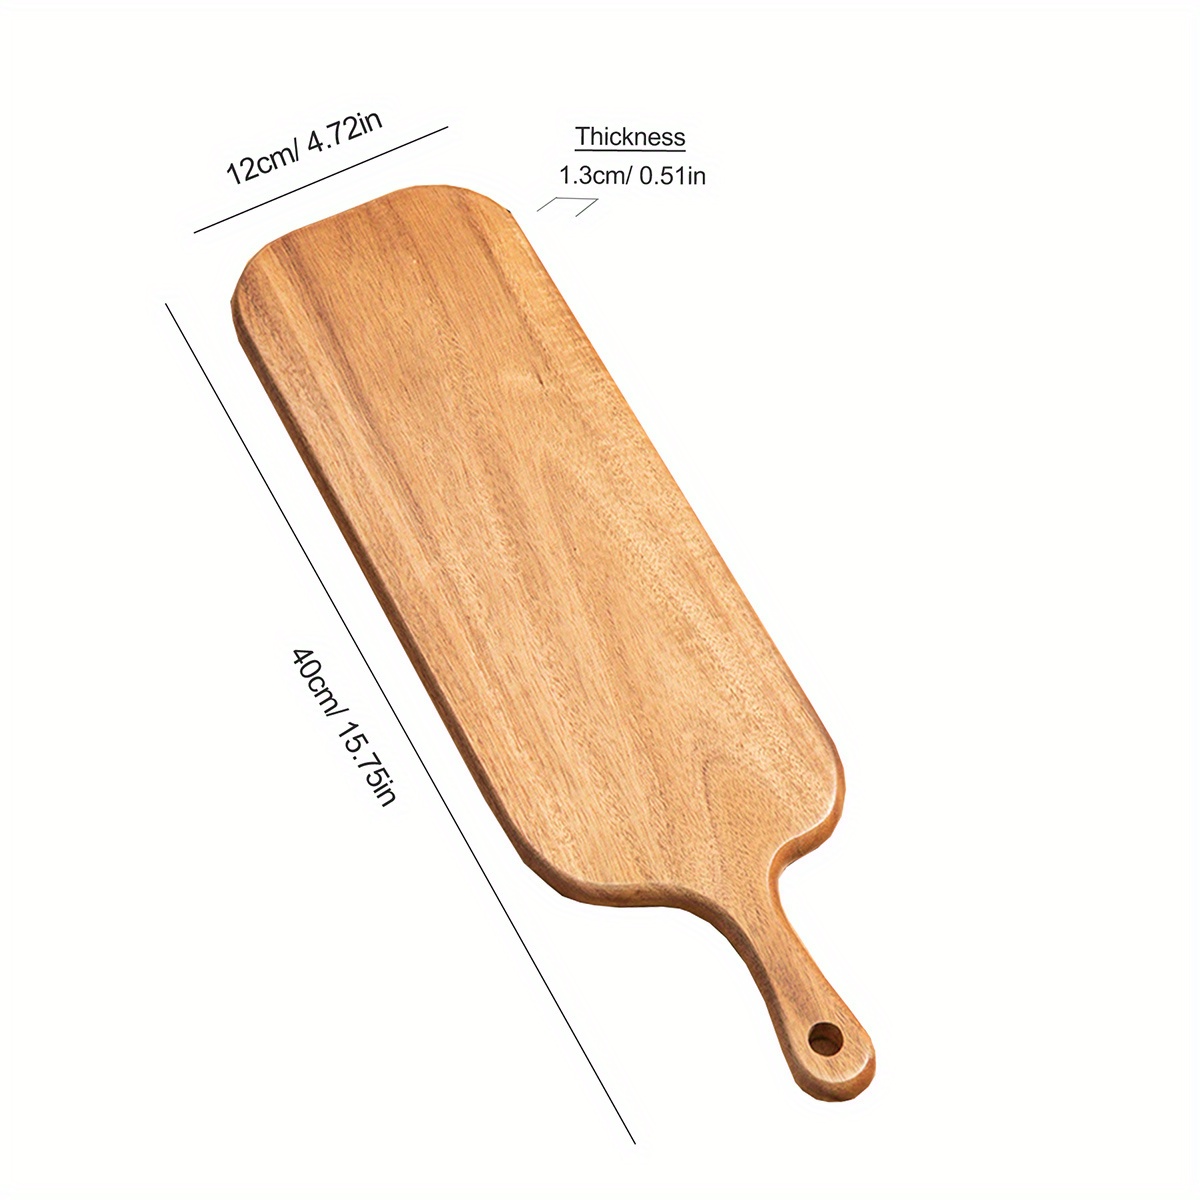  Samhita Acacia Wood Paddle Cutting Boards with handle